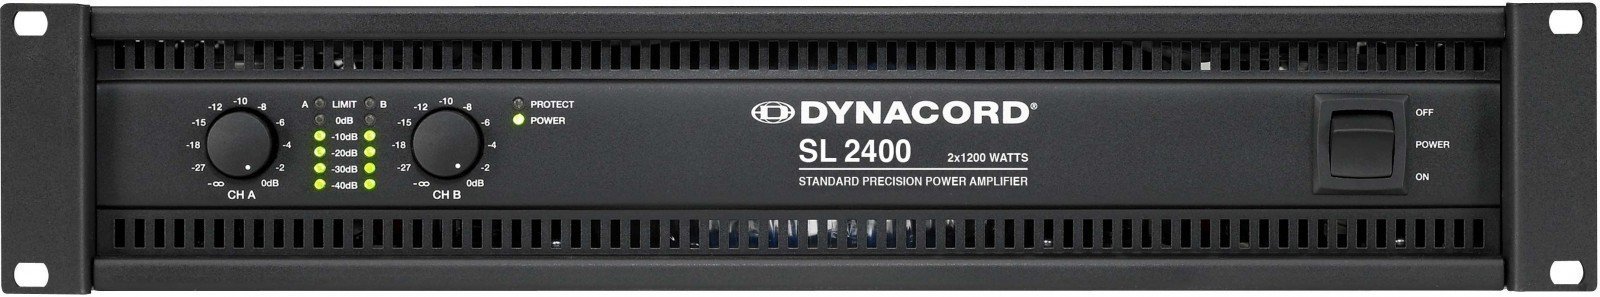 Endstufe Leistungsverstärker Dynacord SL-2400